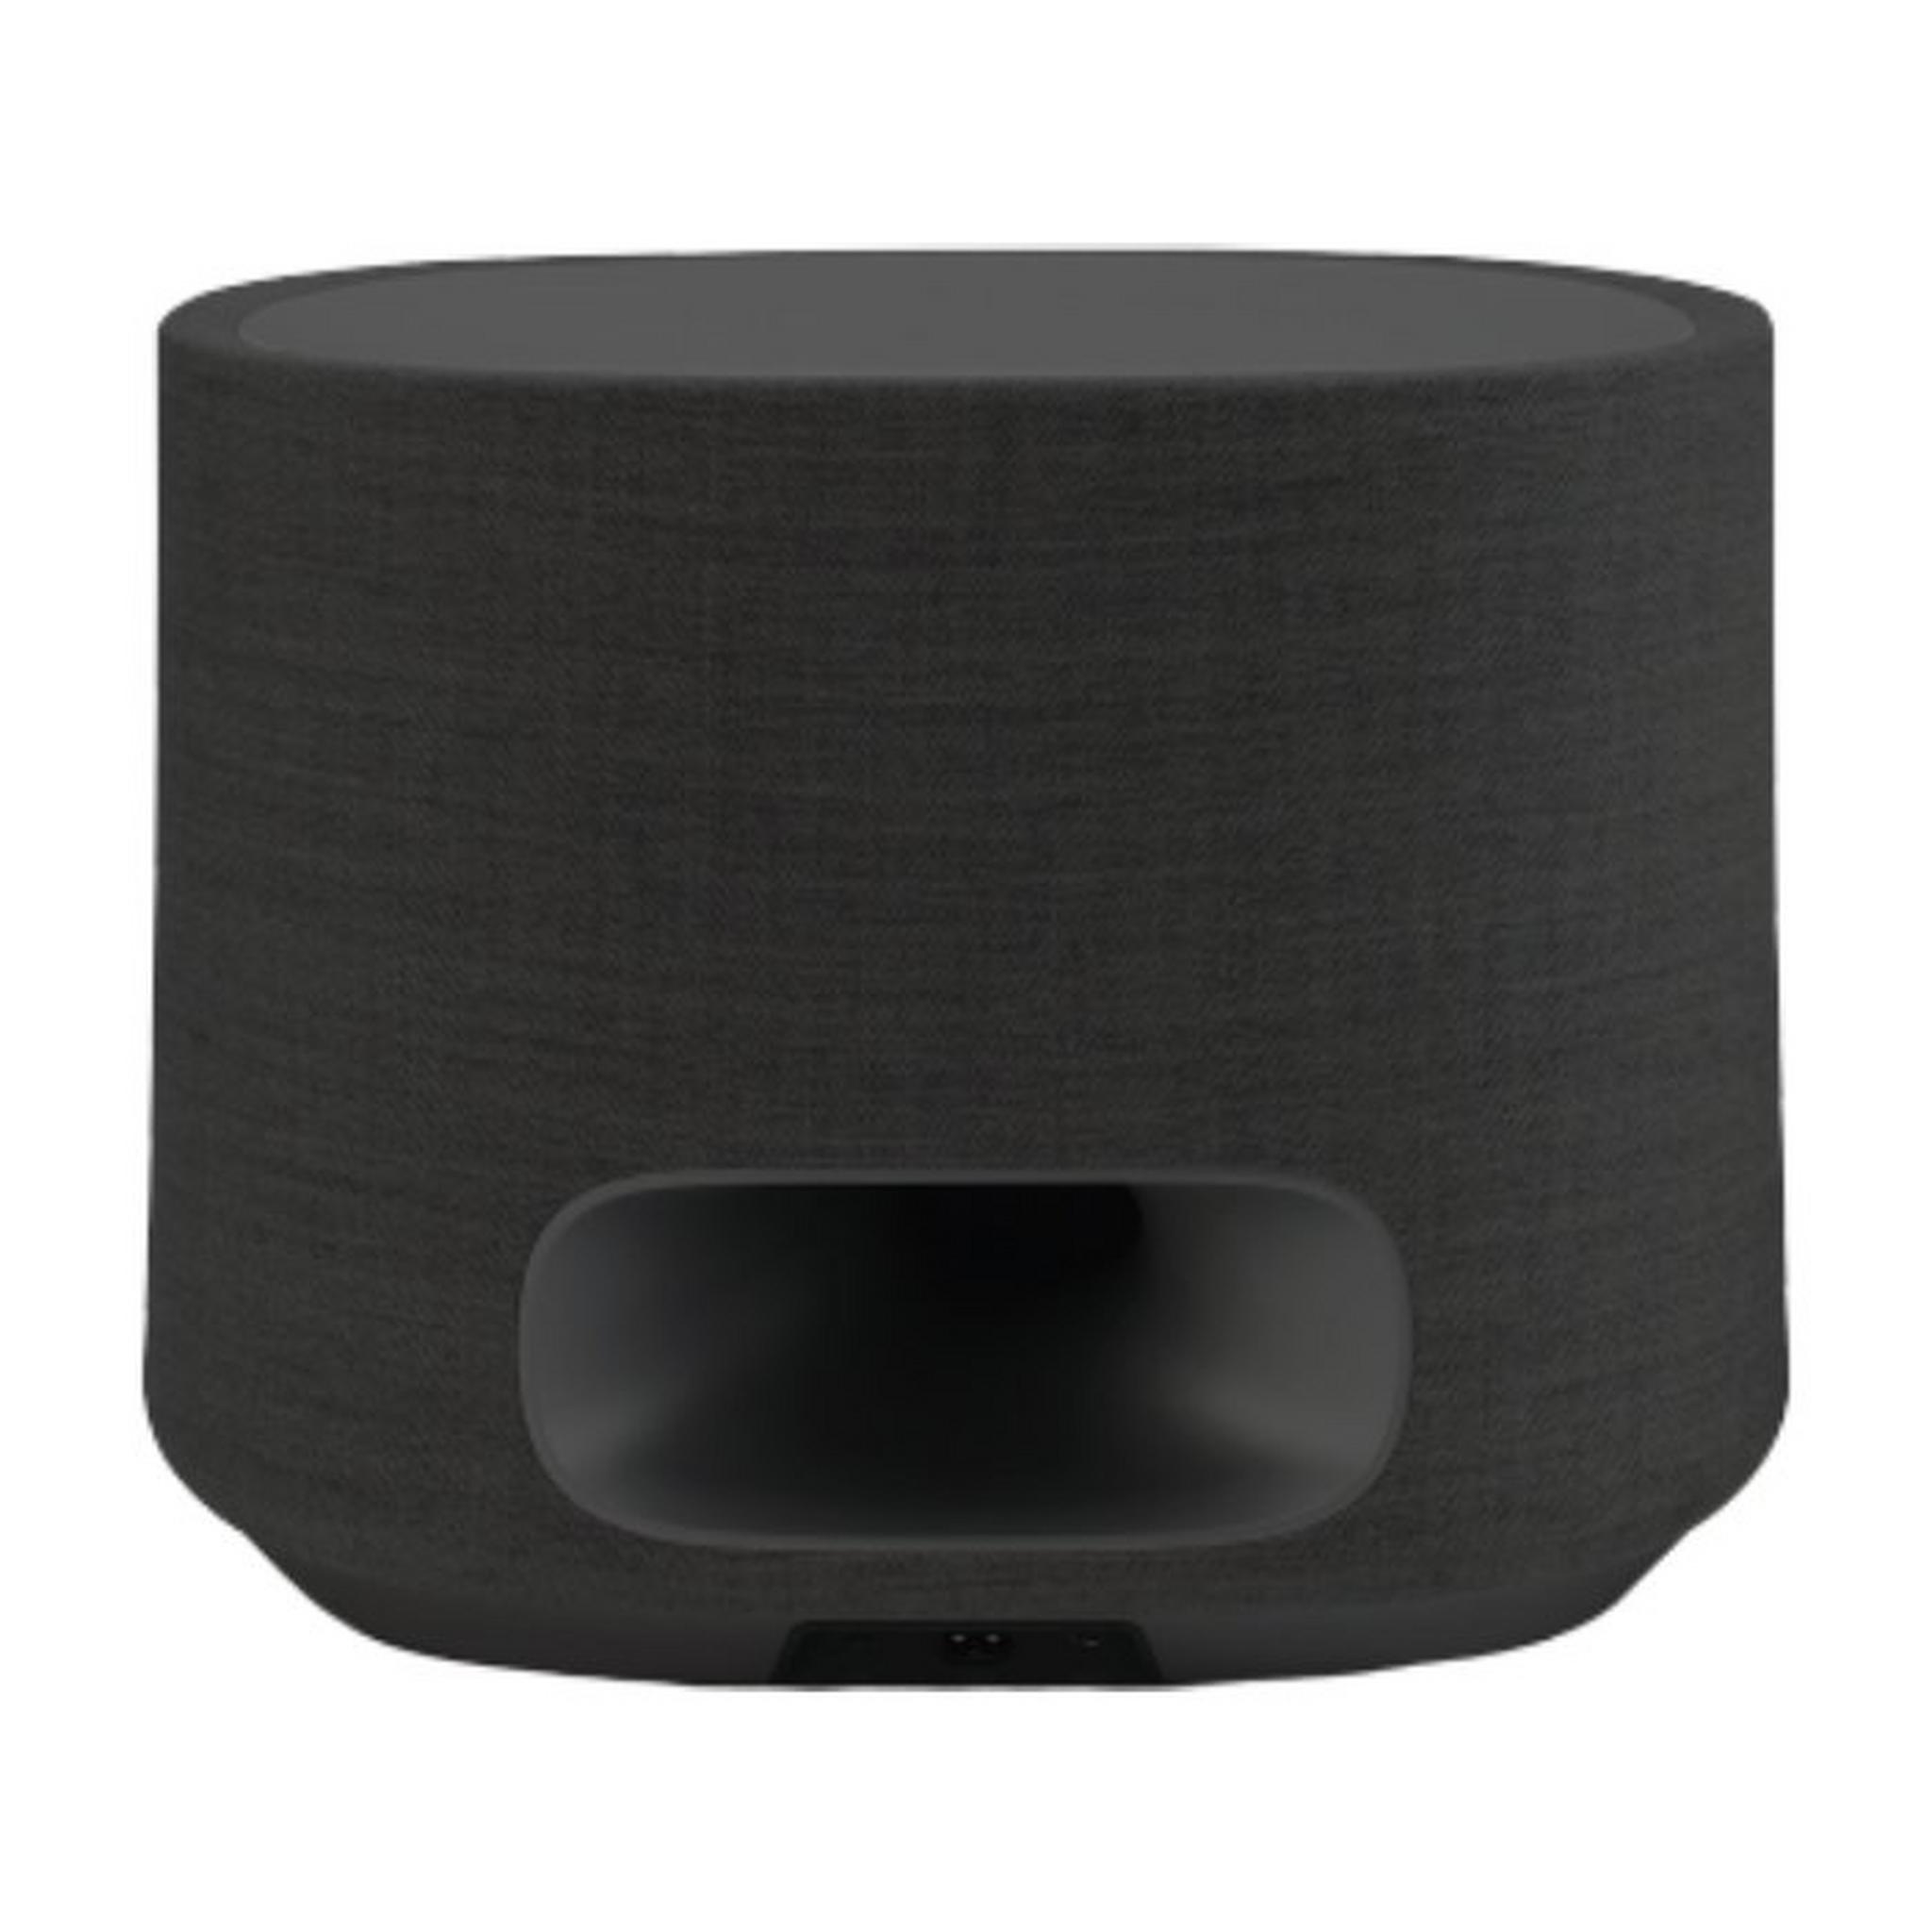 Harman Kardon Citation Sub Wireless Speaker -Black